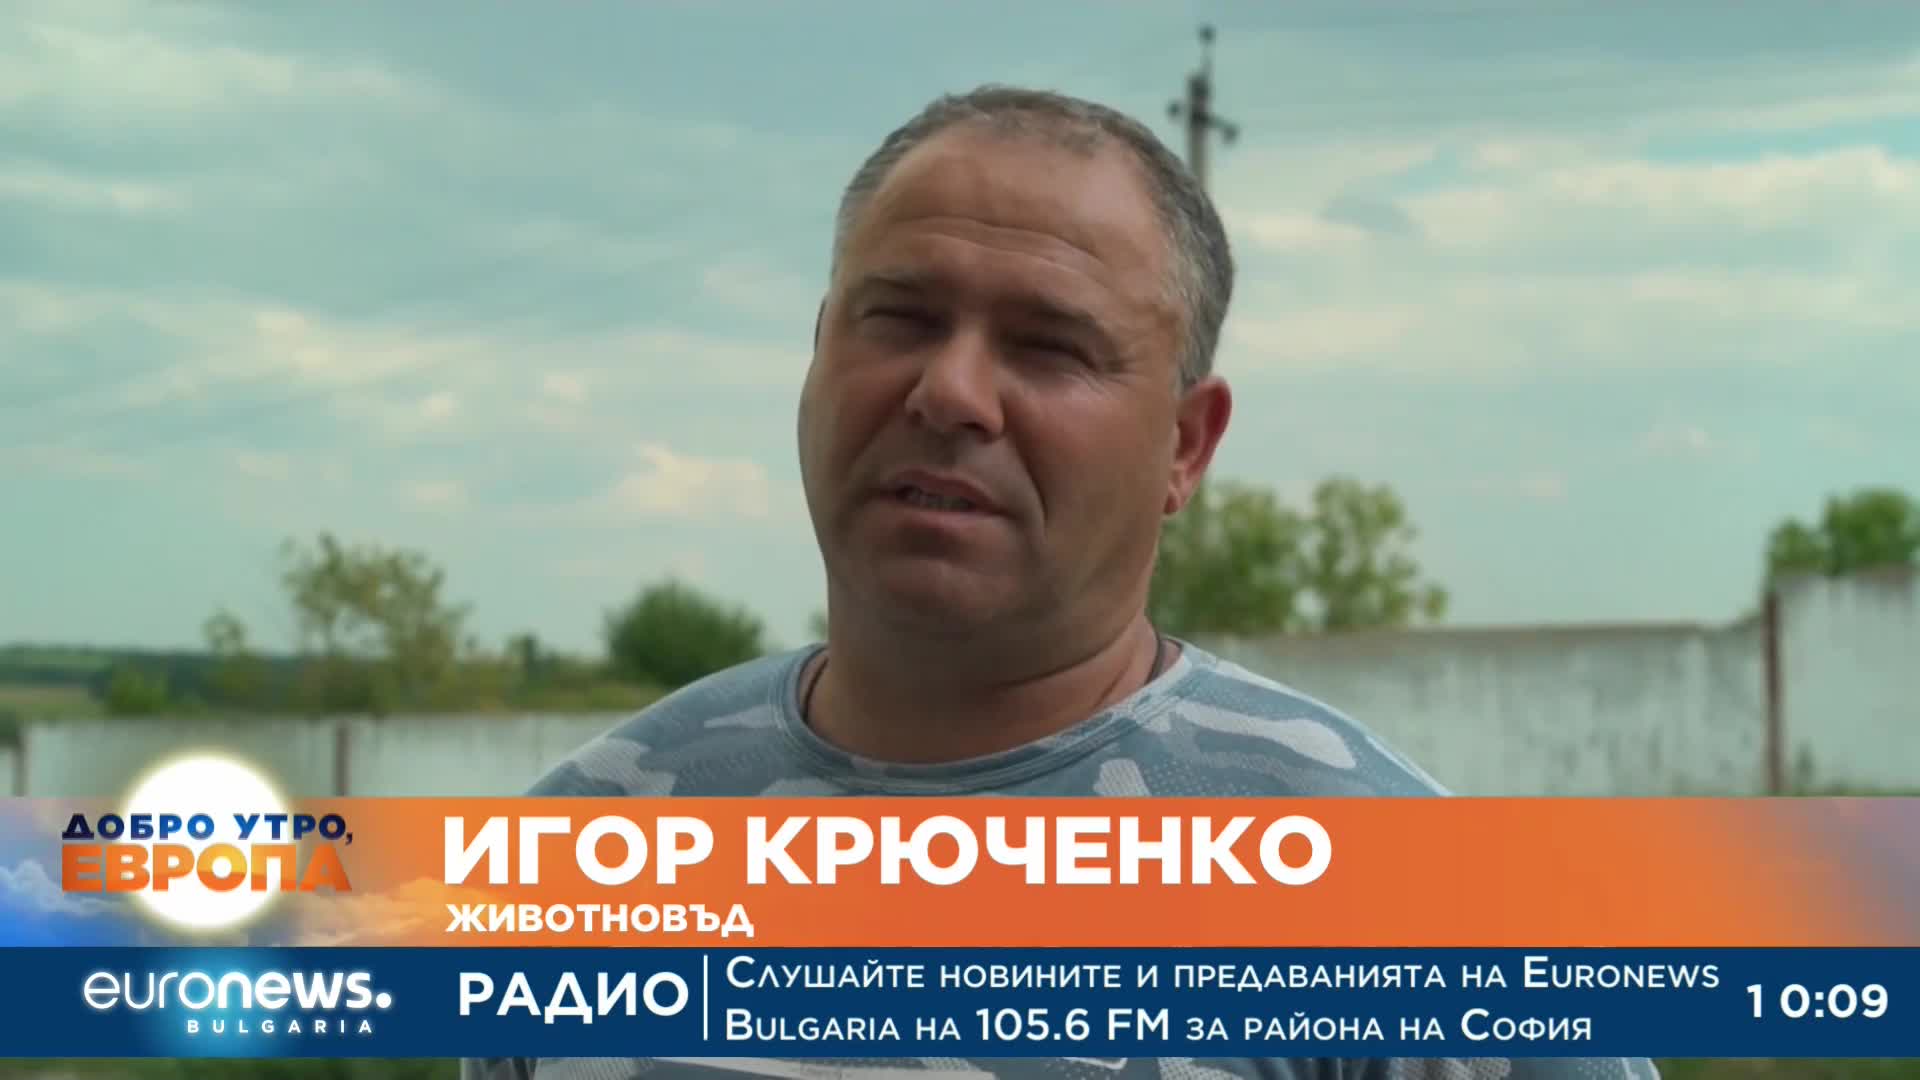 Кравеферма в Донбас оцелява под постоянен обстрел